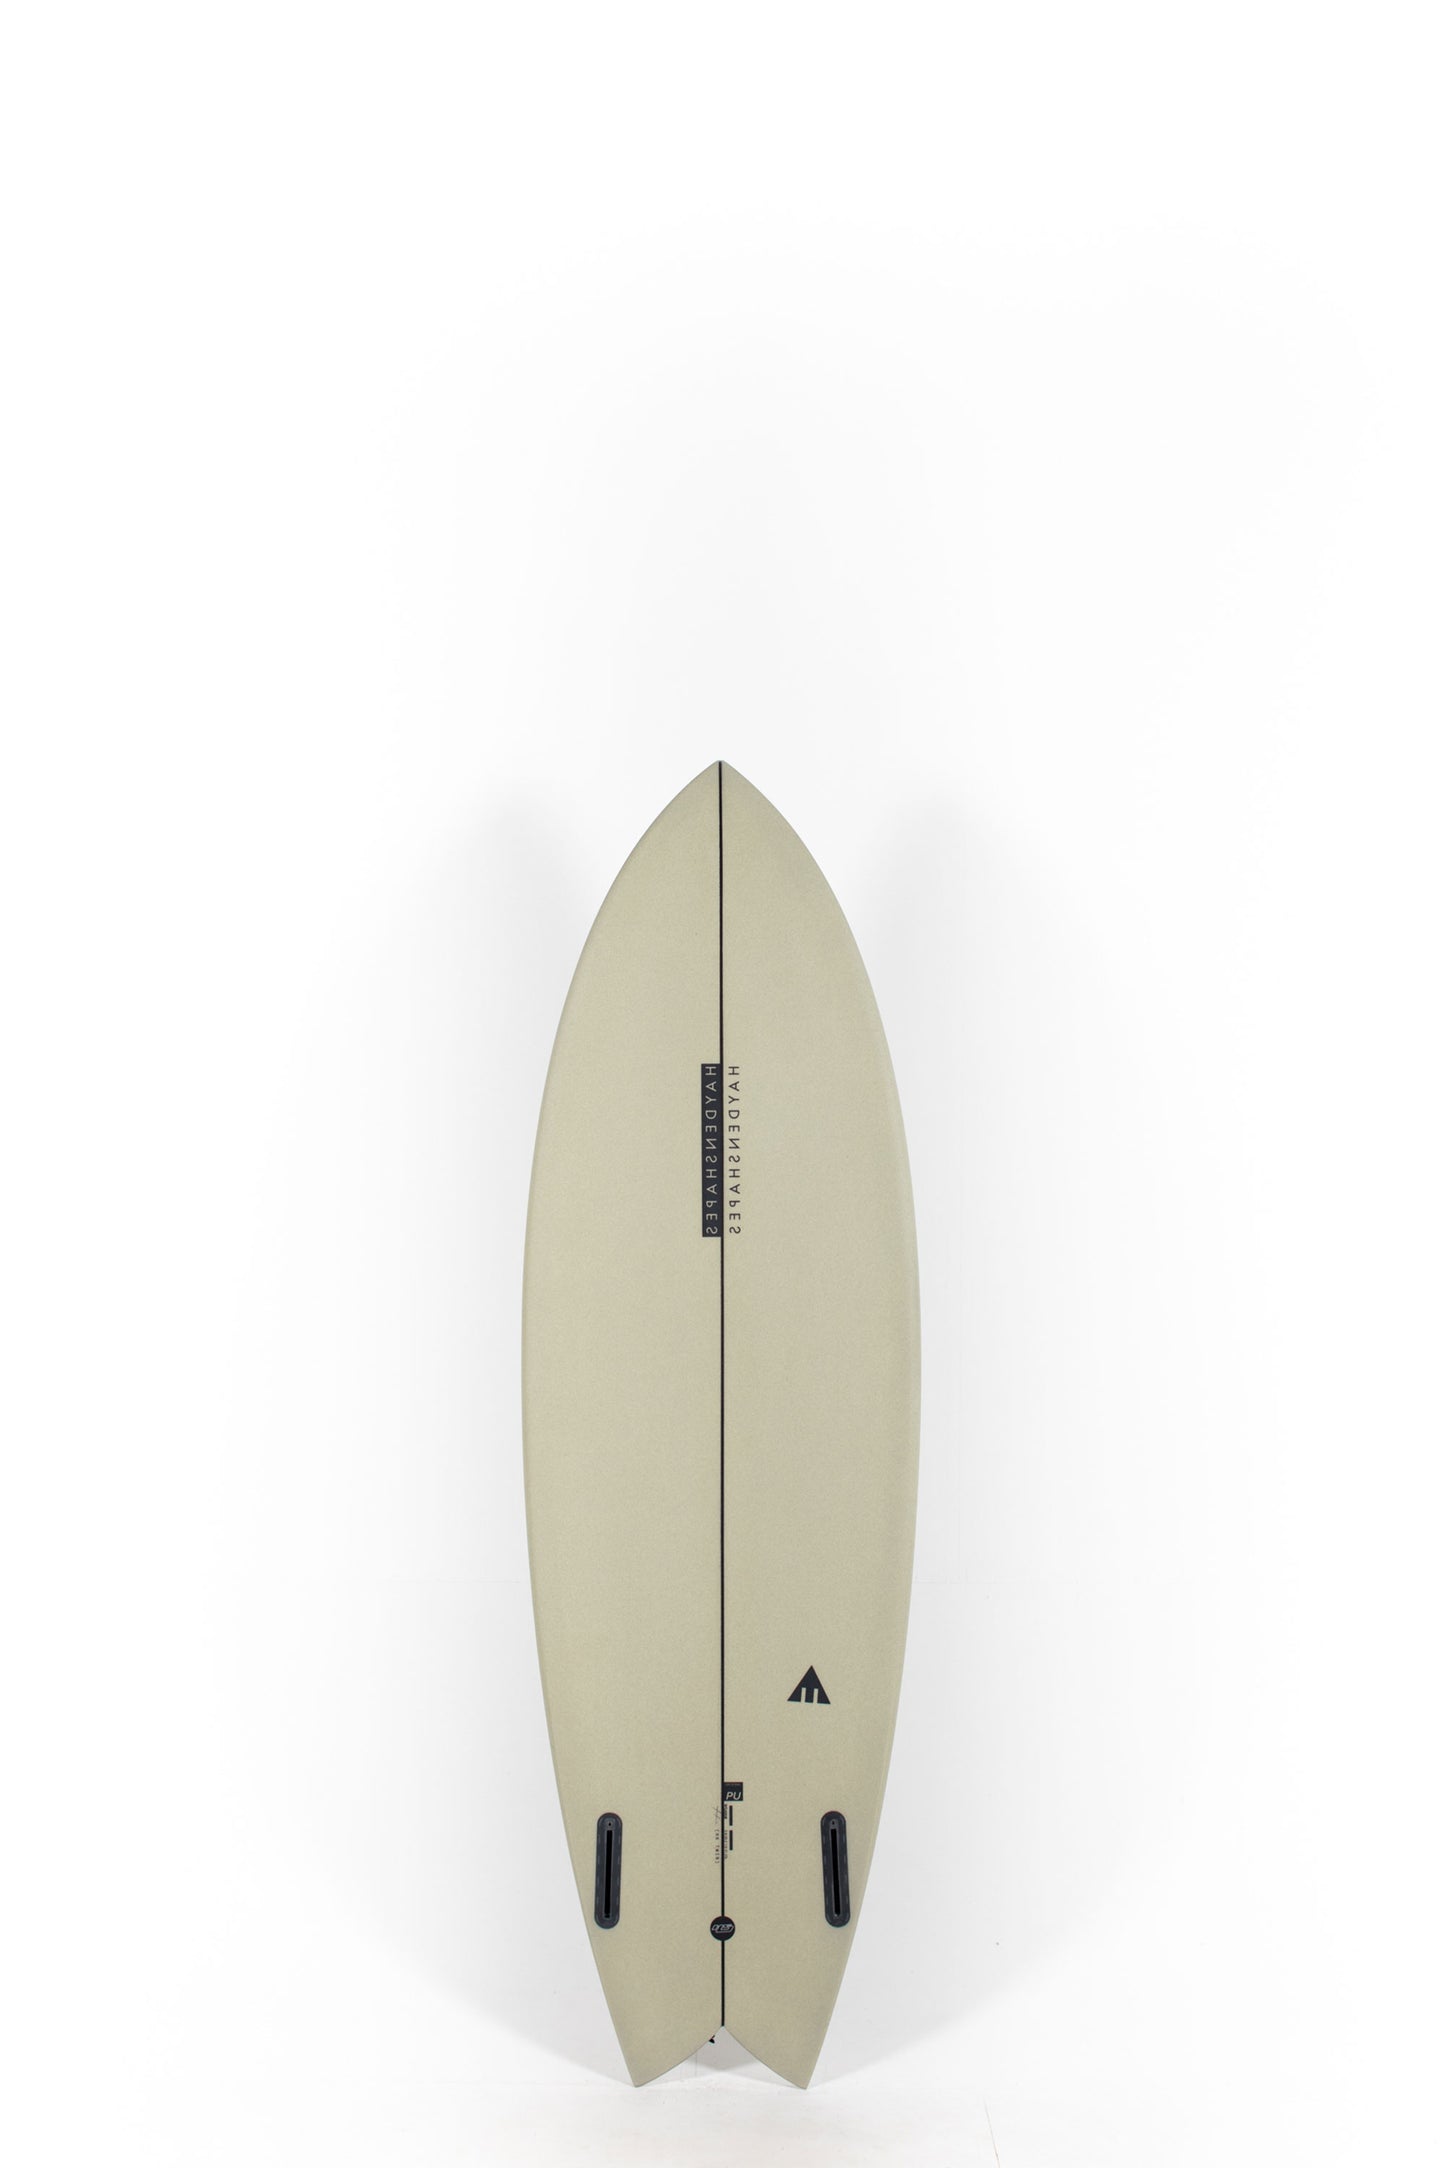 Pukas Surf Shop - HaydenShapes Surfboard - HYPTO KRYPTO TWIN PU - 5'8" X 20" X 2 1/2" - 31.23L